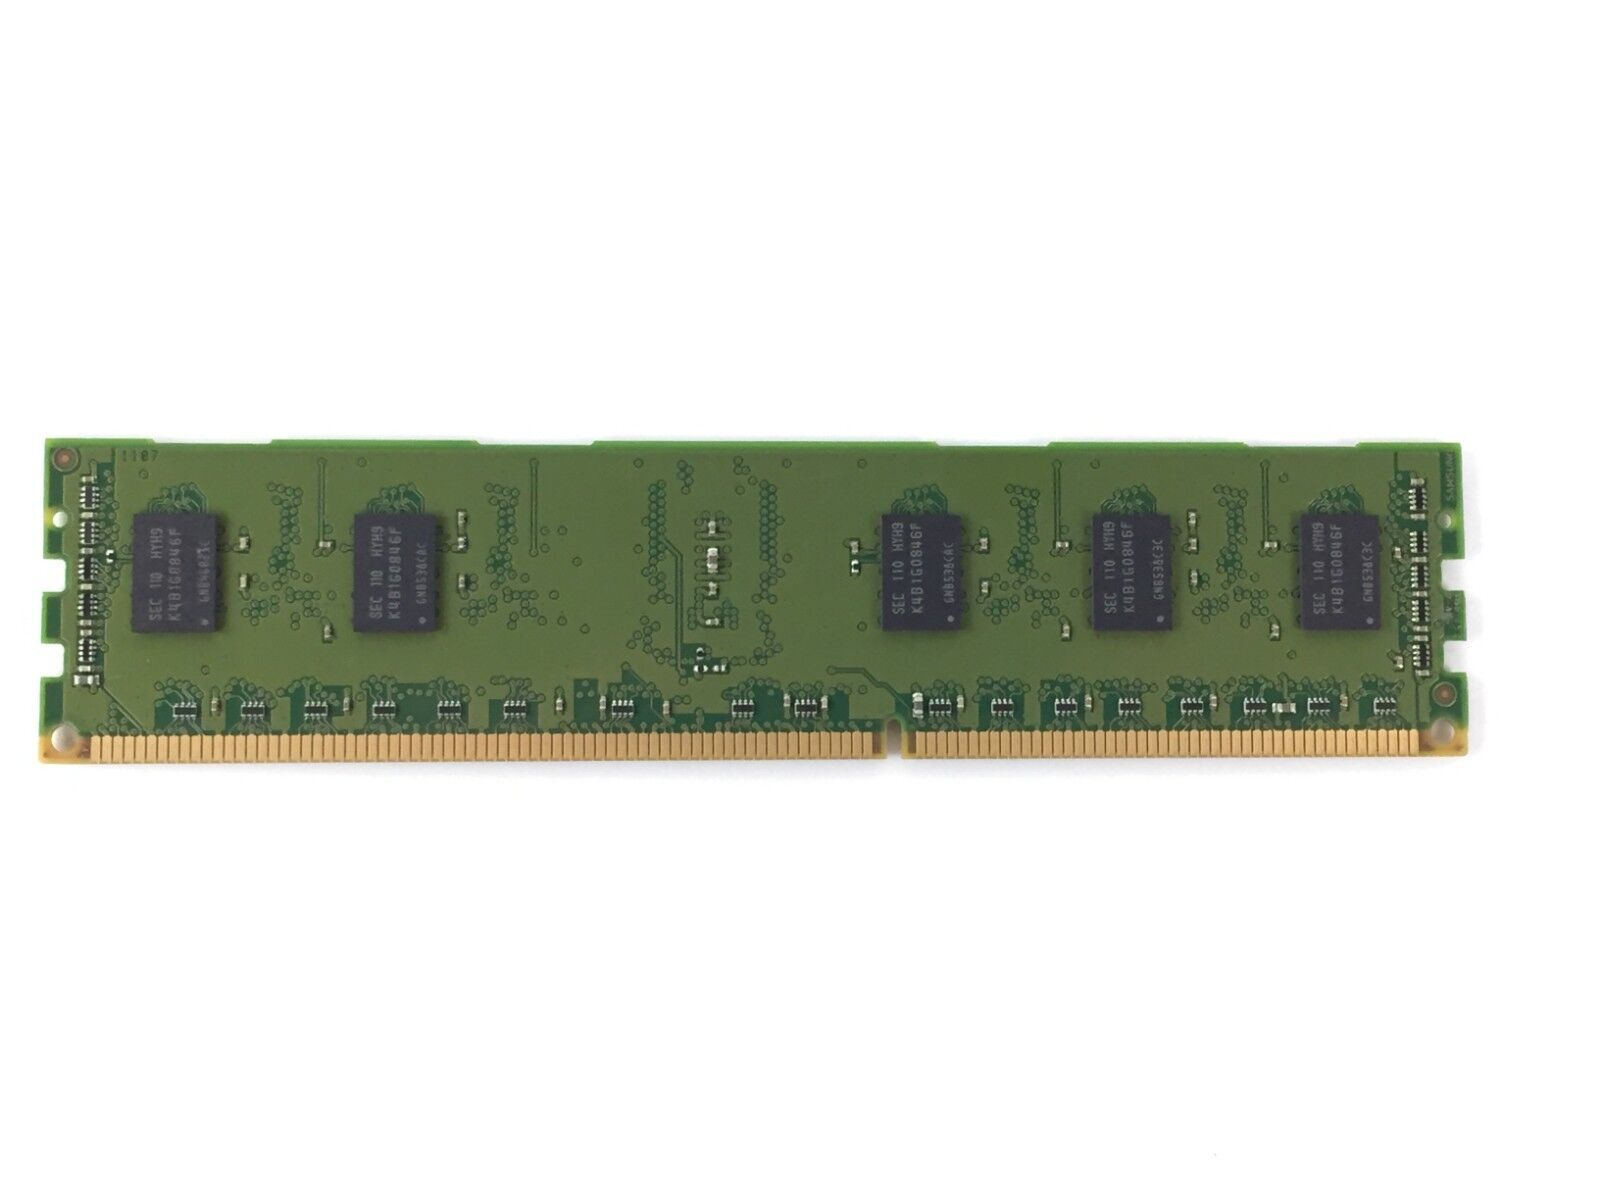 Samsung M393B2873FH0-CH9 1GB DDR3 Registered ECC PC3-10600 1333Mhz 1Rx8 Memory